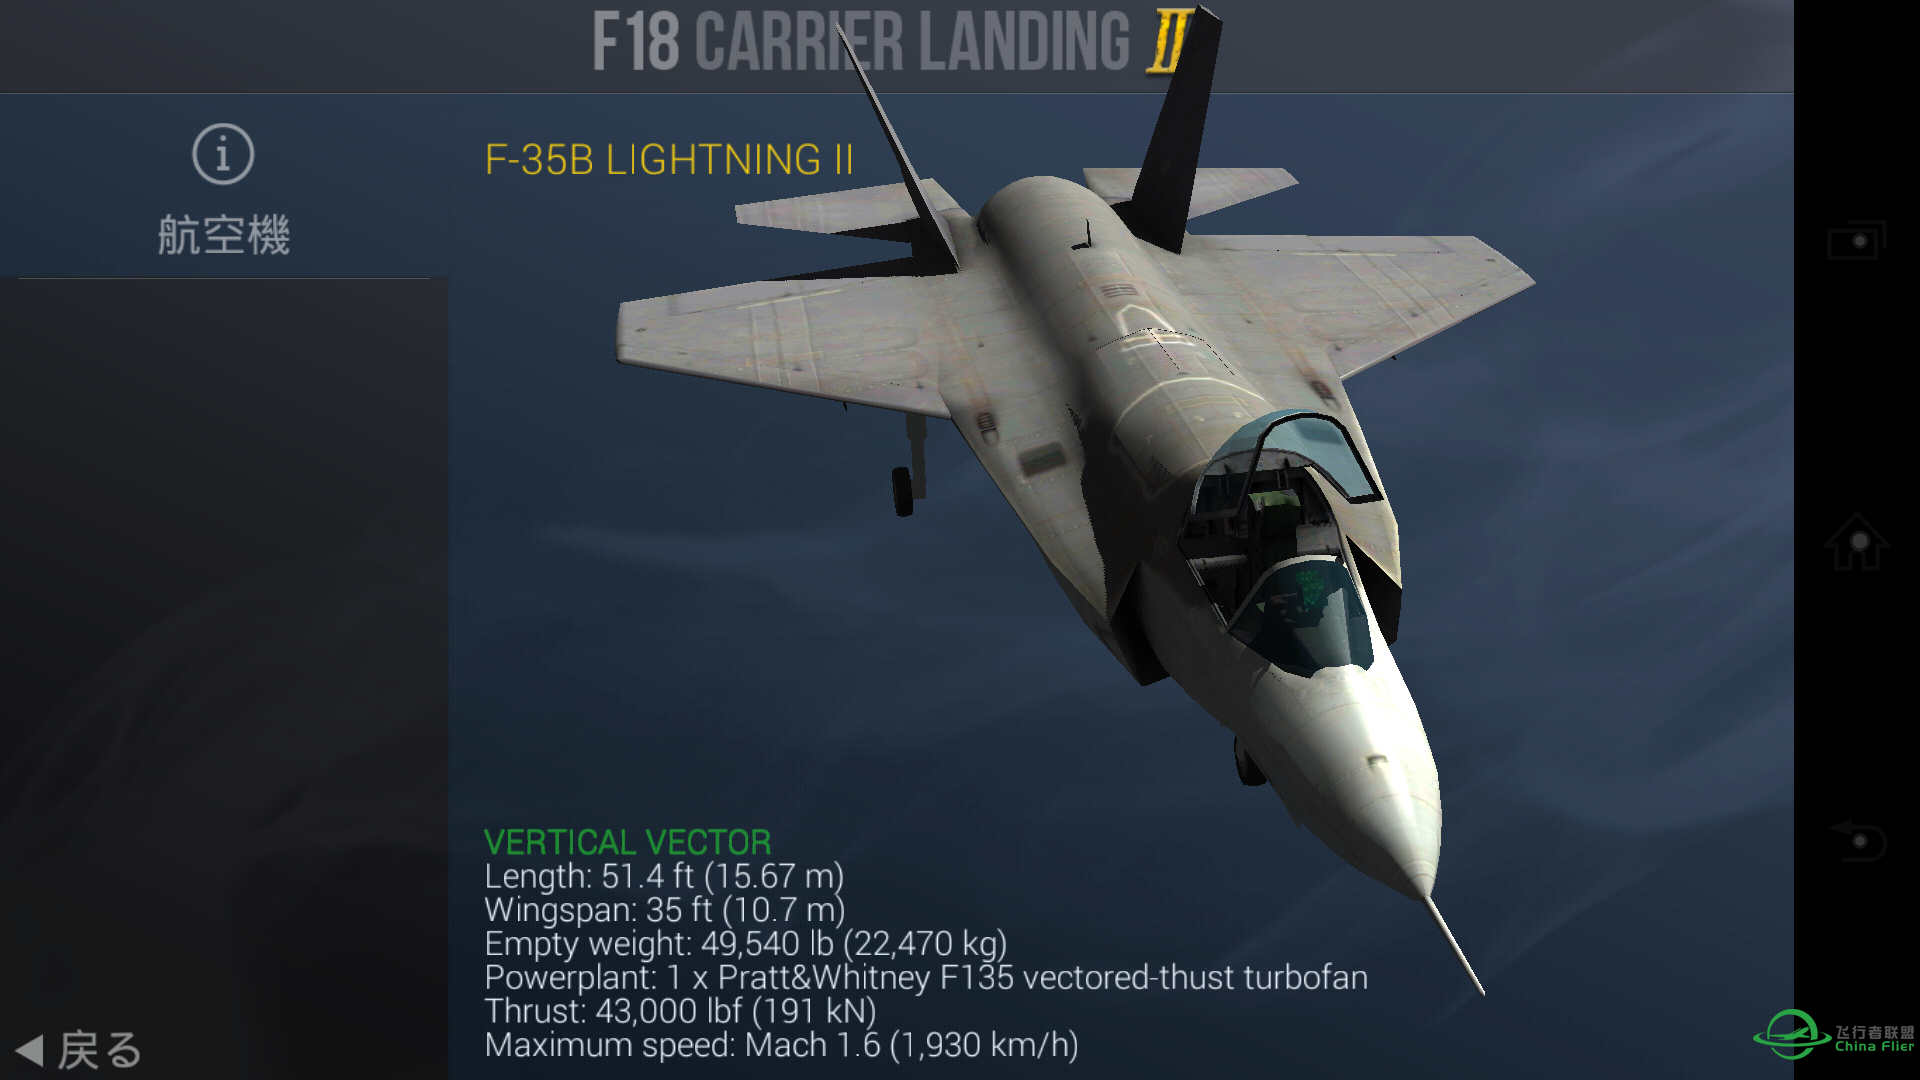 [截图而已]F18 Carrier Landing2 Pro-24 